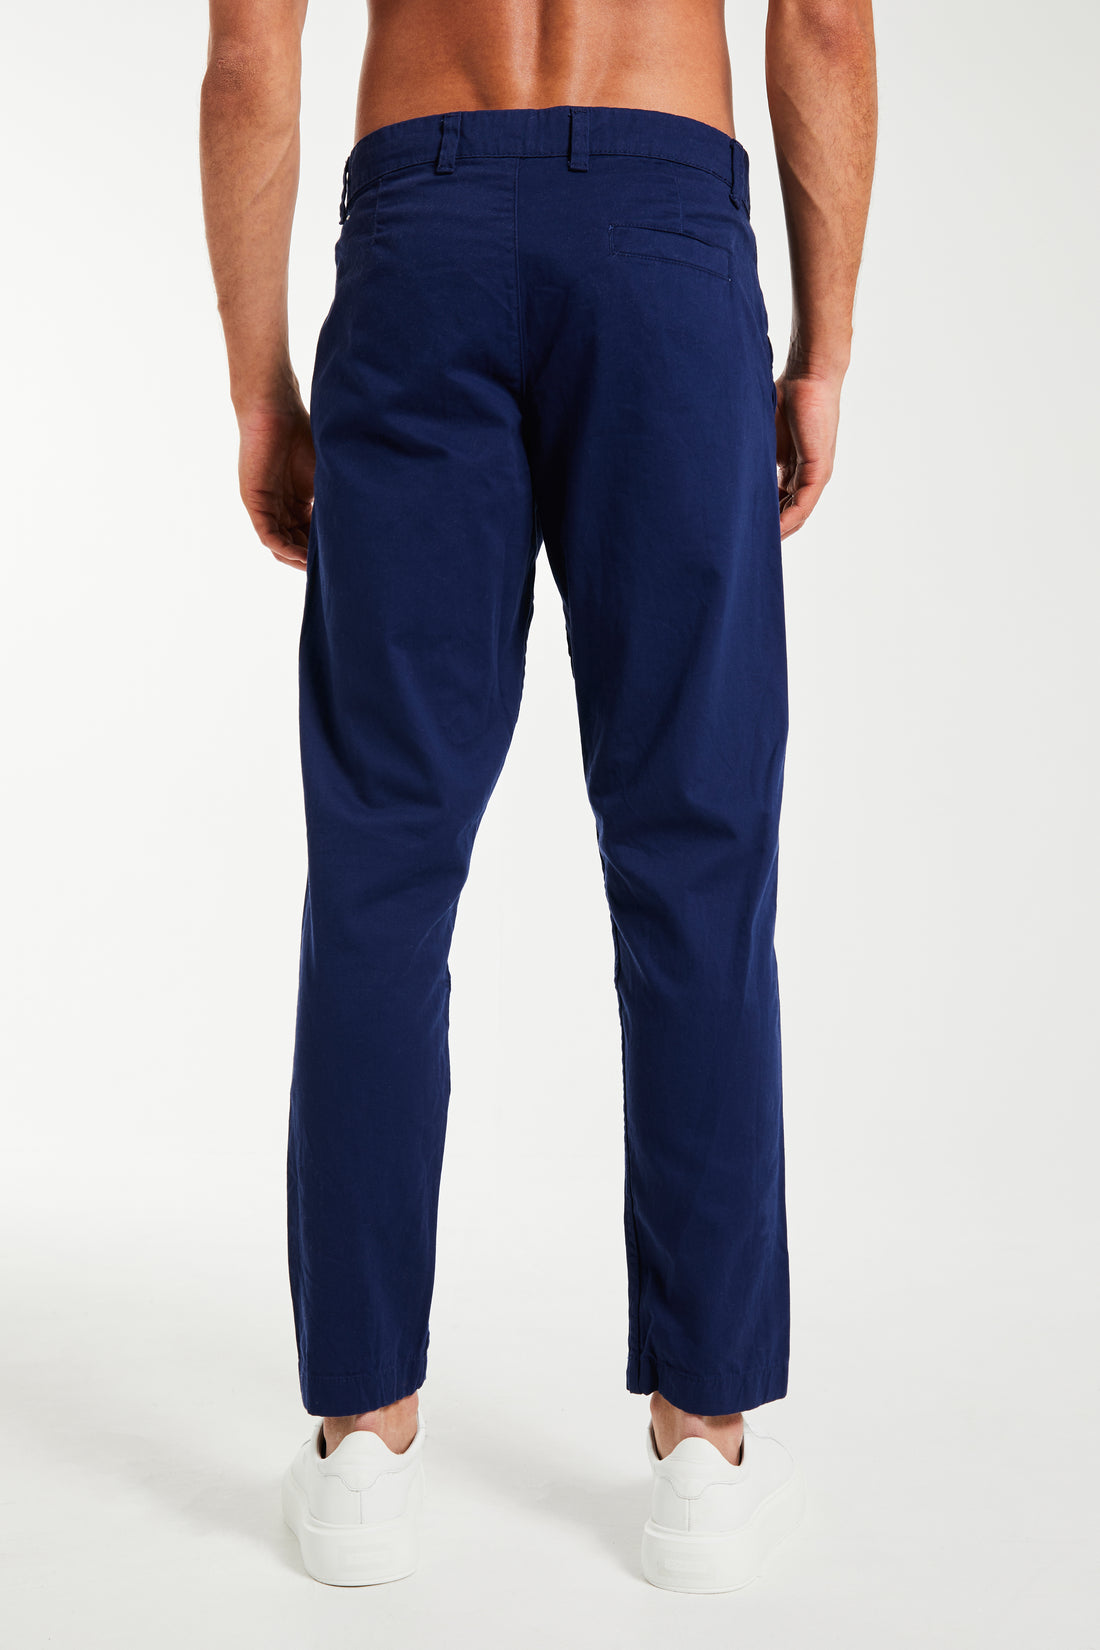 Back profile of men's chino pants in dark blue